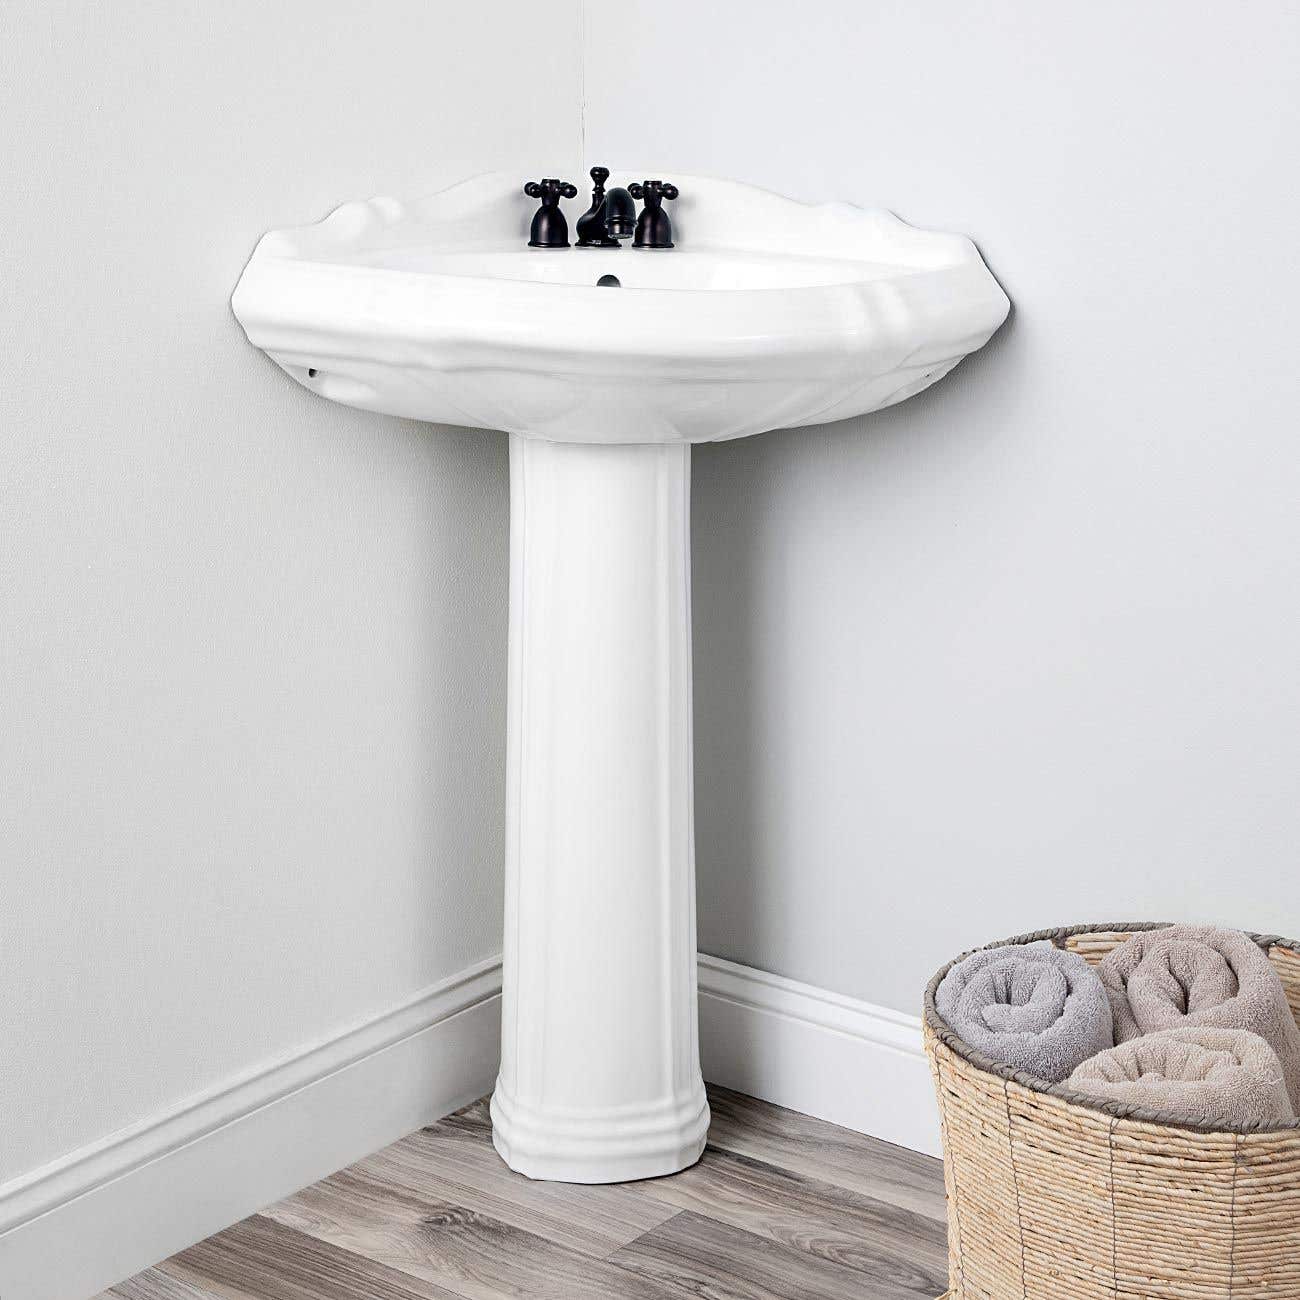 alzata 26 inch corner pedestal sink | vintage tub & bath